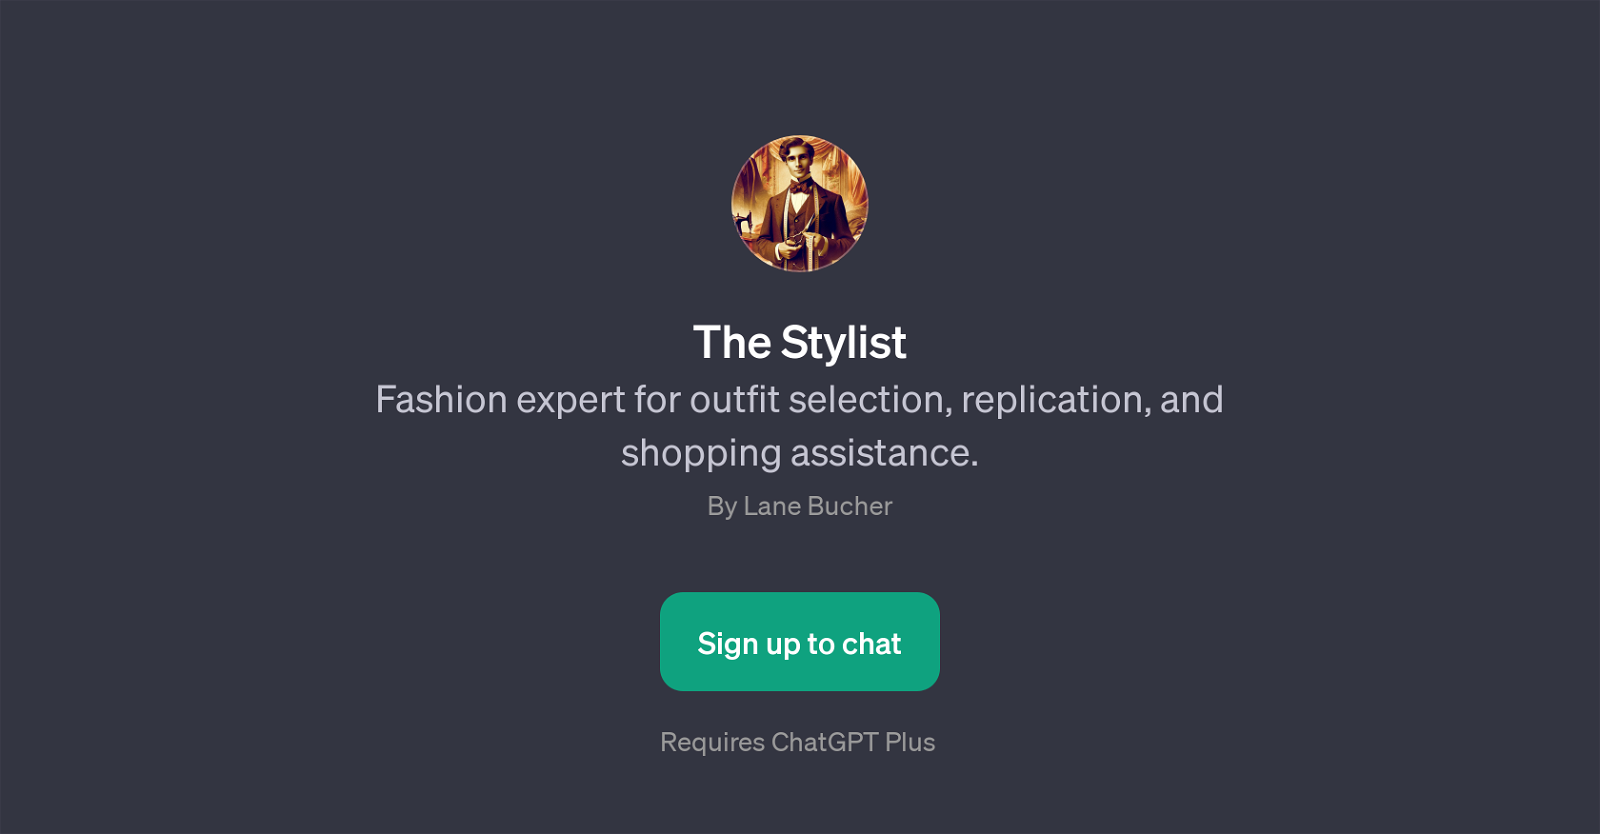 The Stylist website